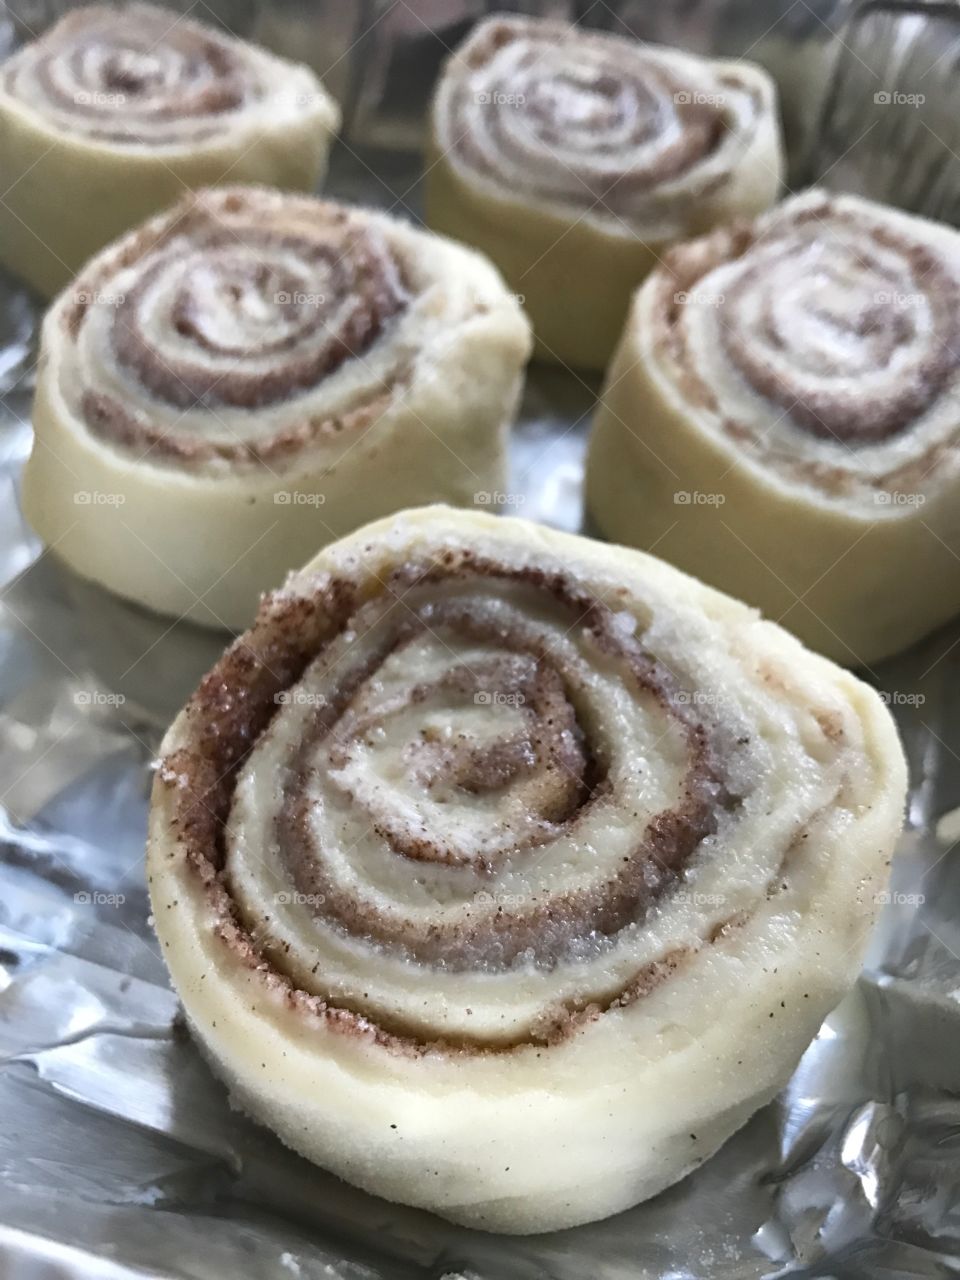 Cinnamon rolls ready to bake!